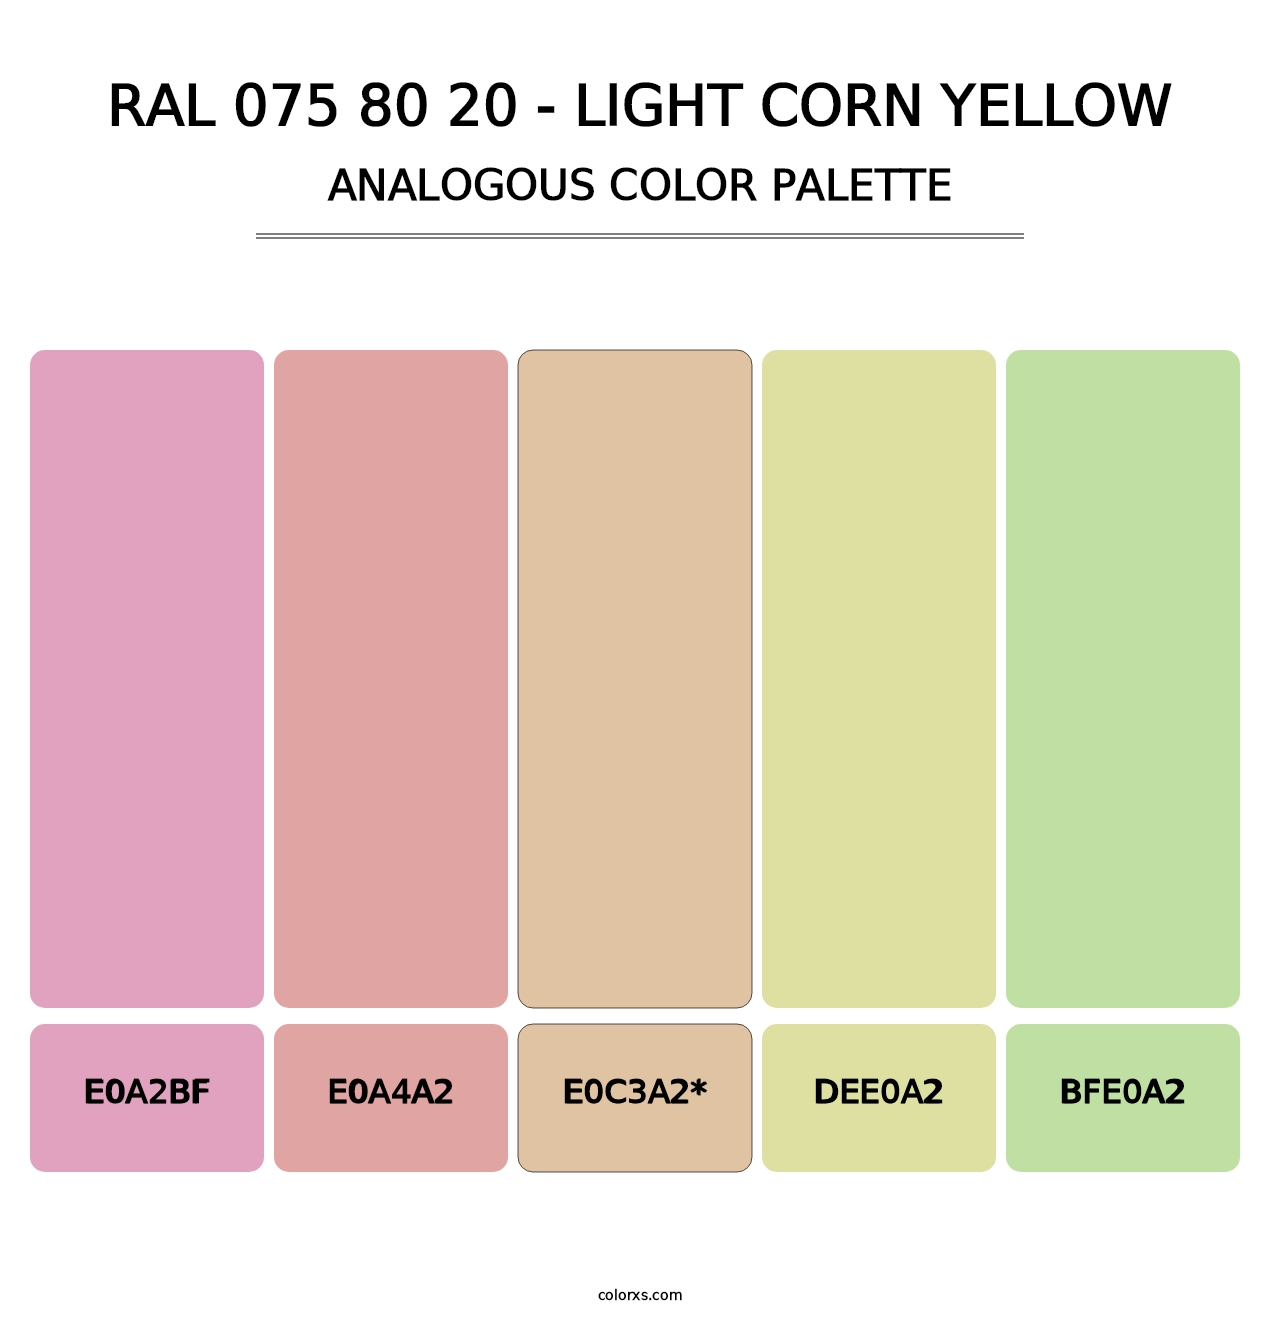 RAL 075 80 20 - Light Corn Yellow - Analogous Color Palette